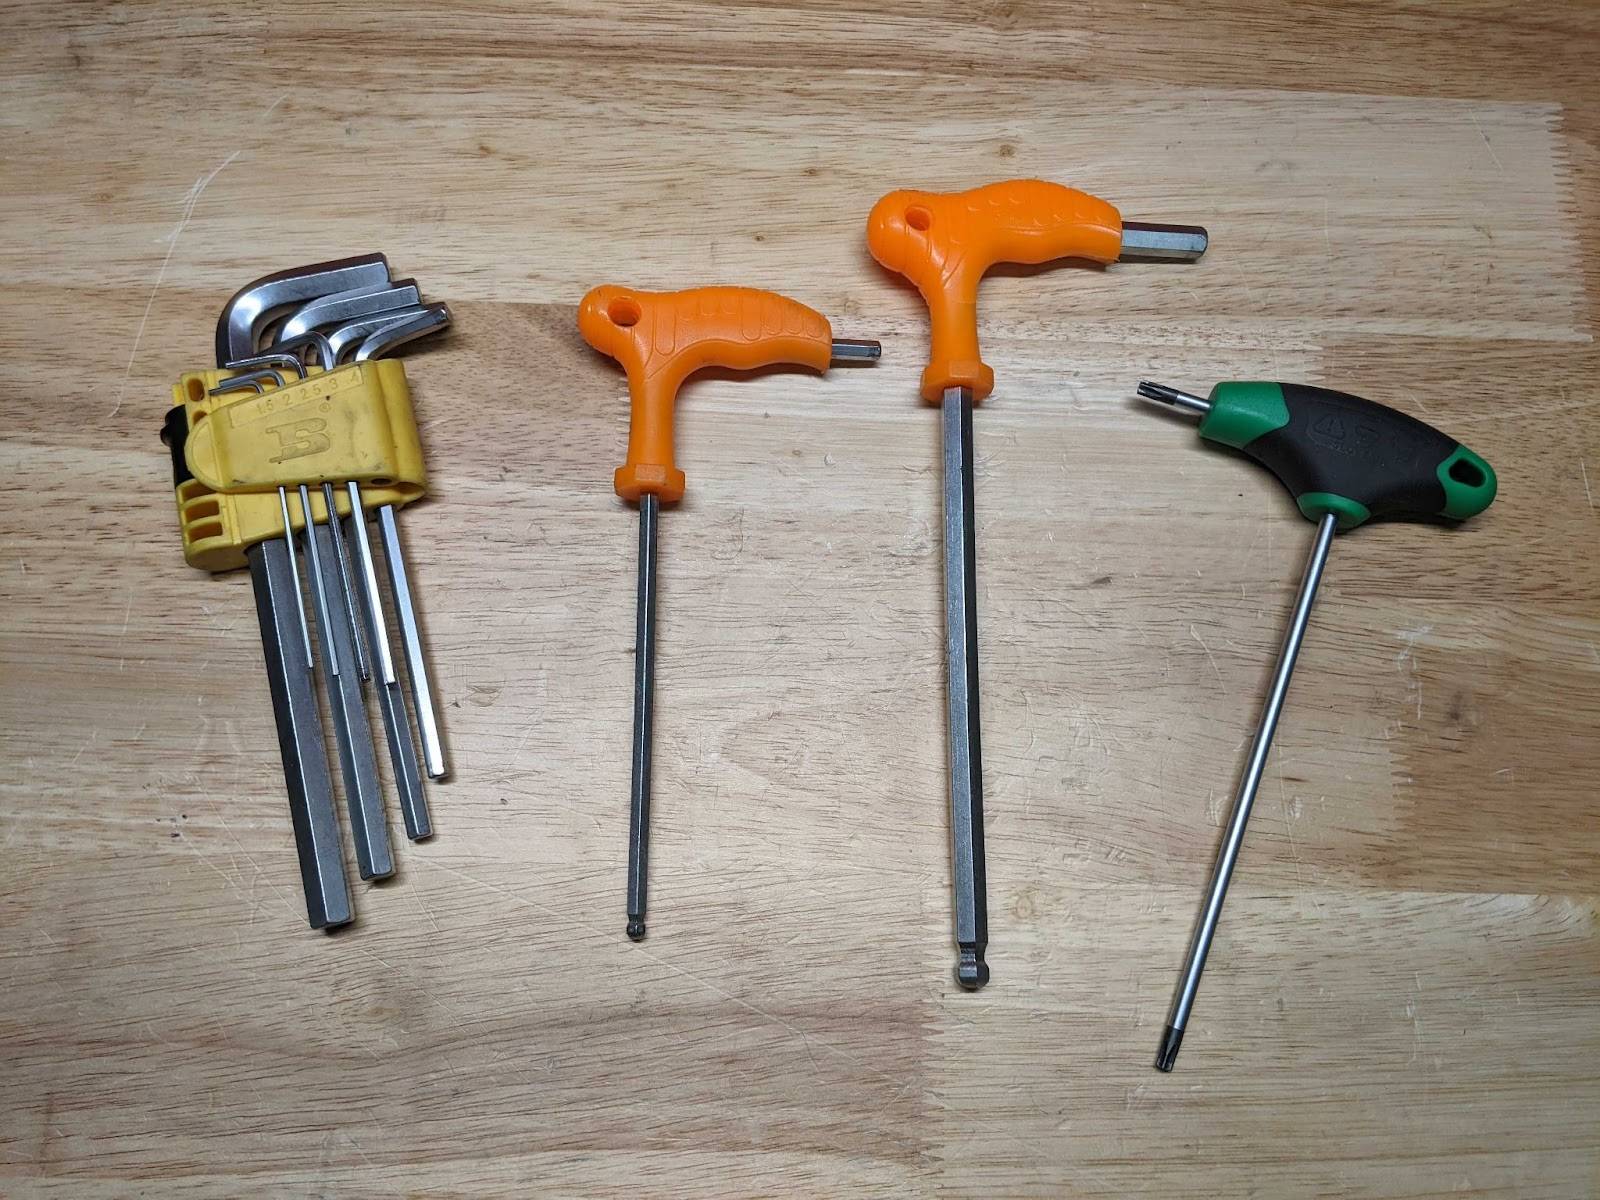 allen keys (set, 5mm, 8mm) and t20 screwdriver